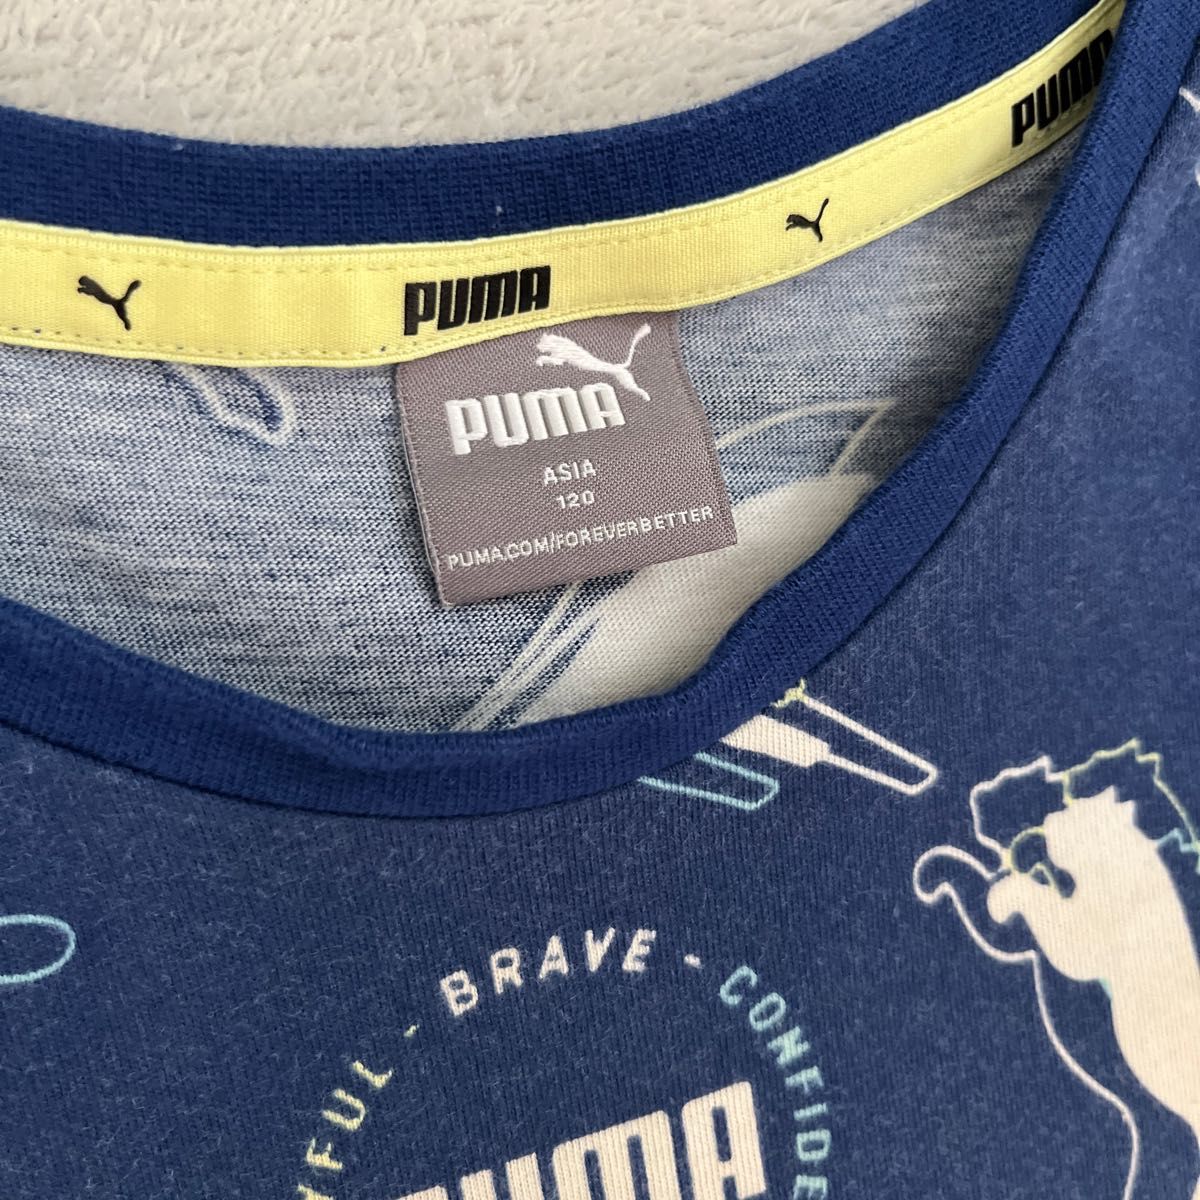 【PUMA】プーマ キッズ Tシャツ ブルー 総柄 120